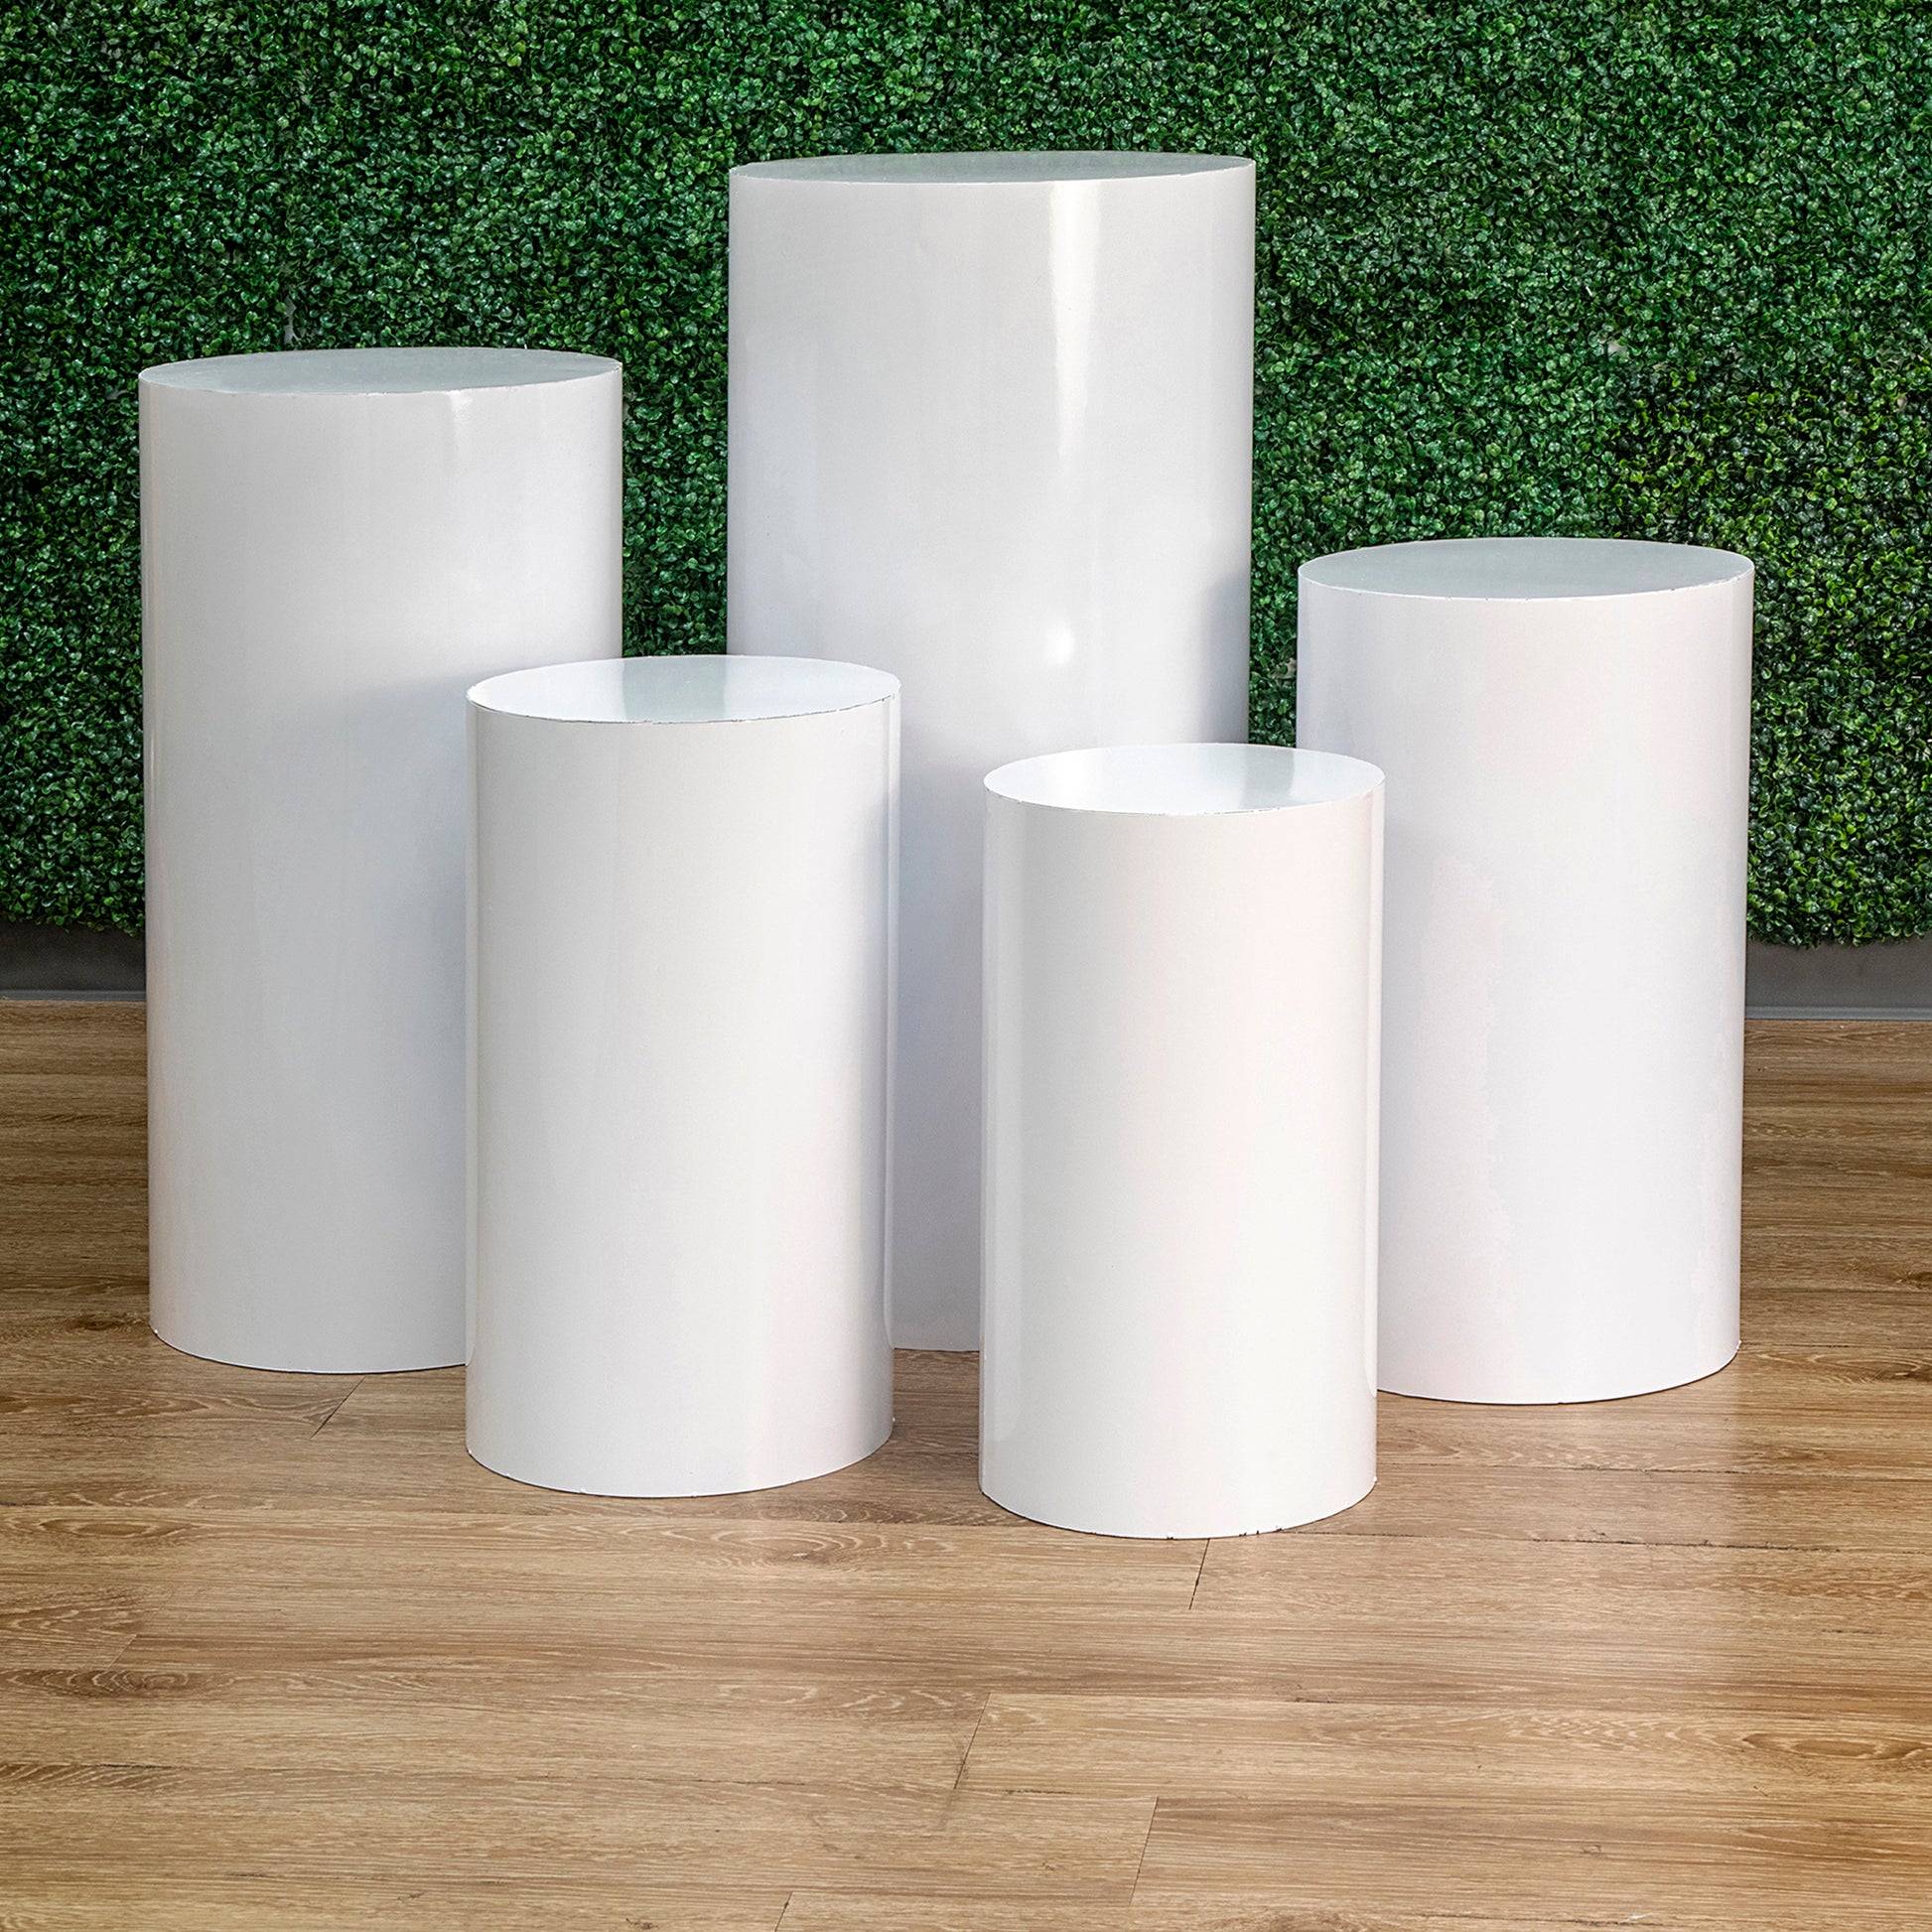 Metal Cylinder Pedestal Display Stands 5 Pcs/Set - White